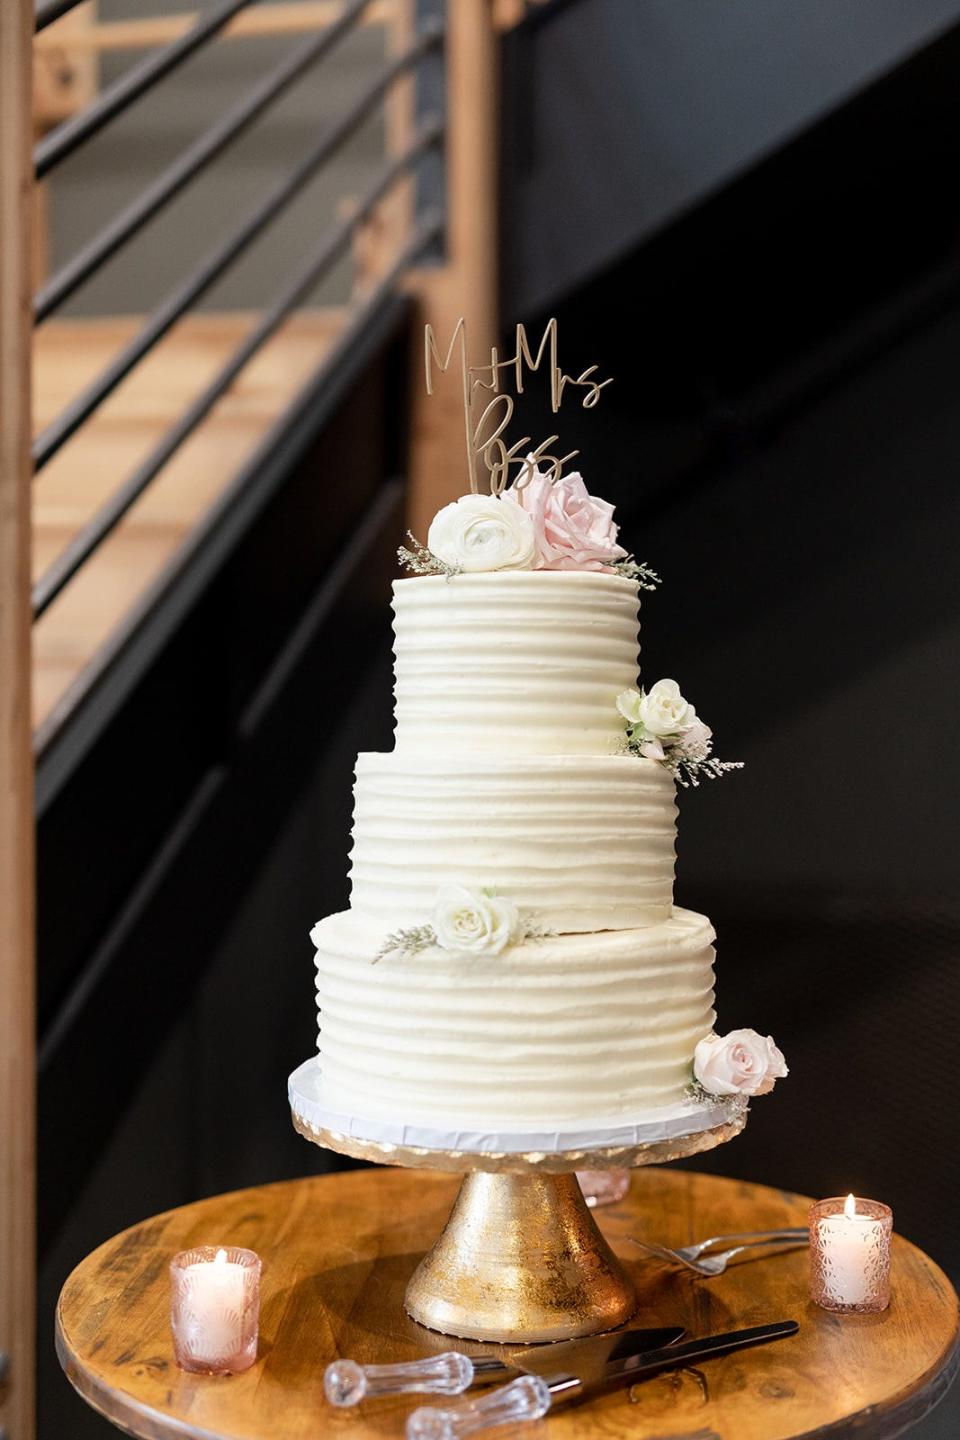 A wedding cake made by Ashlyn's Sweet Revenge.